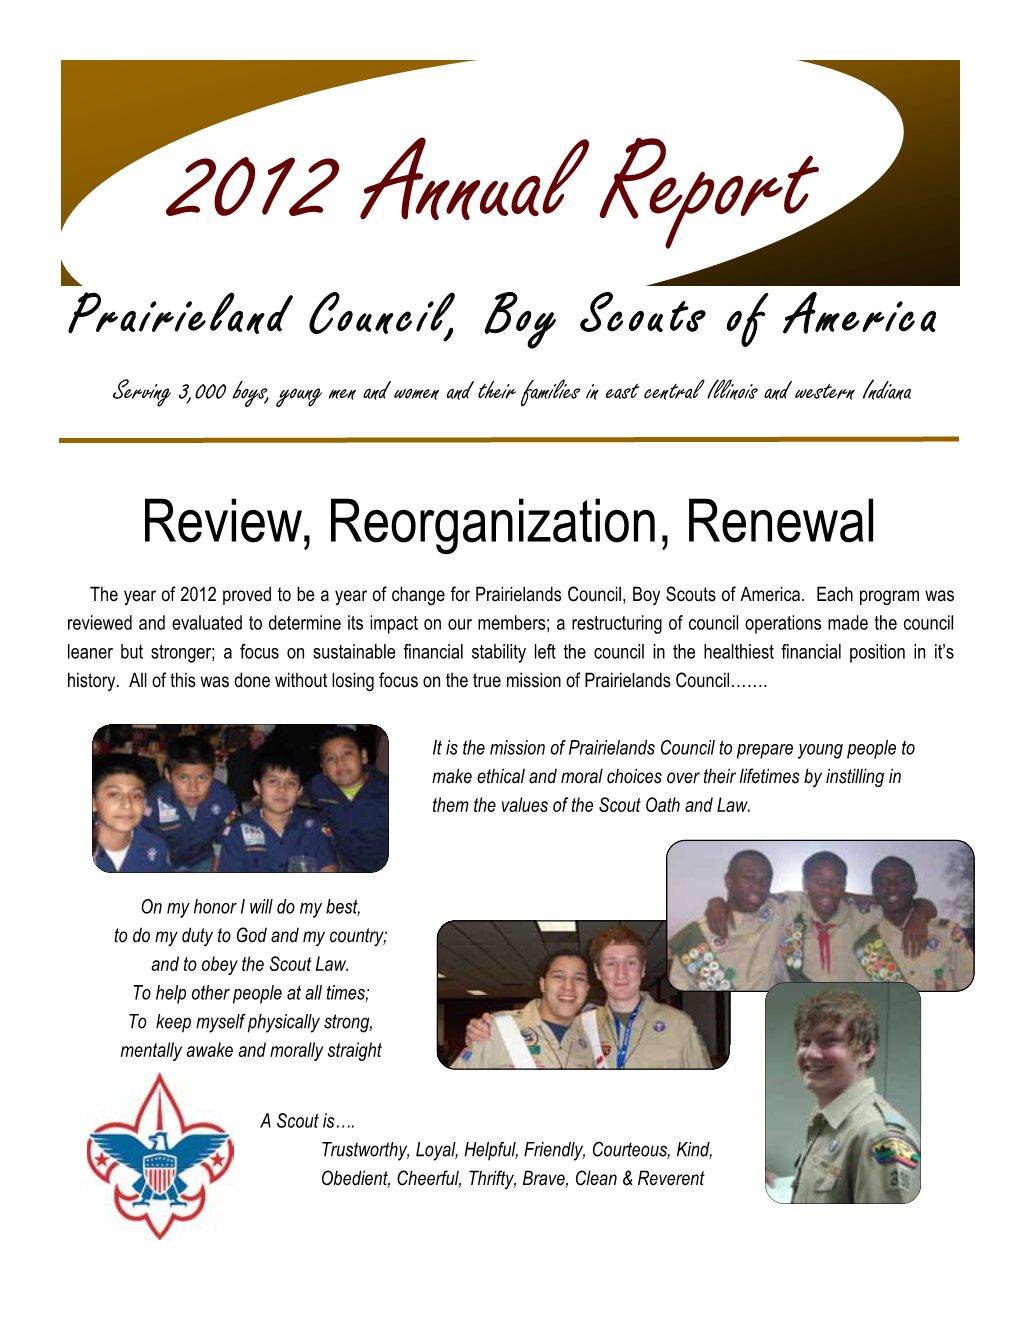 Prairieland Council, Boy Scouts of America Review, Reorganization